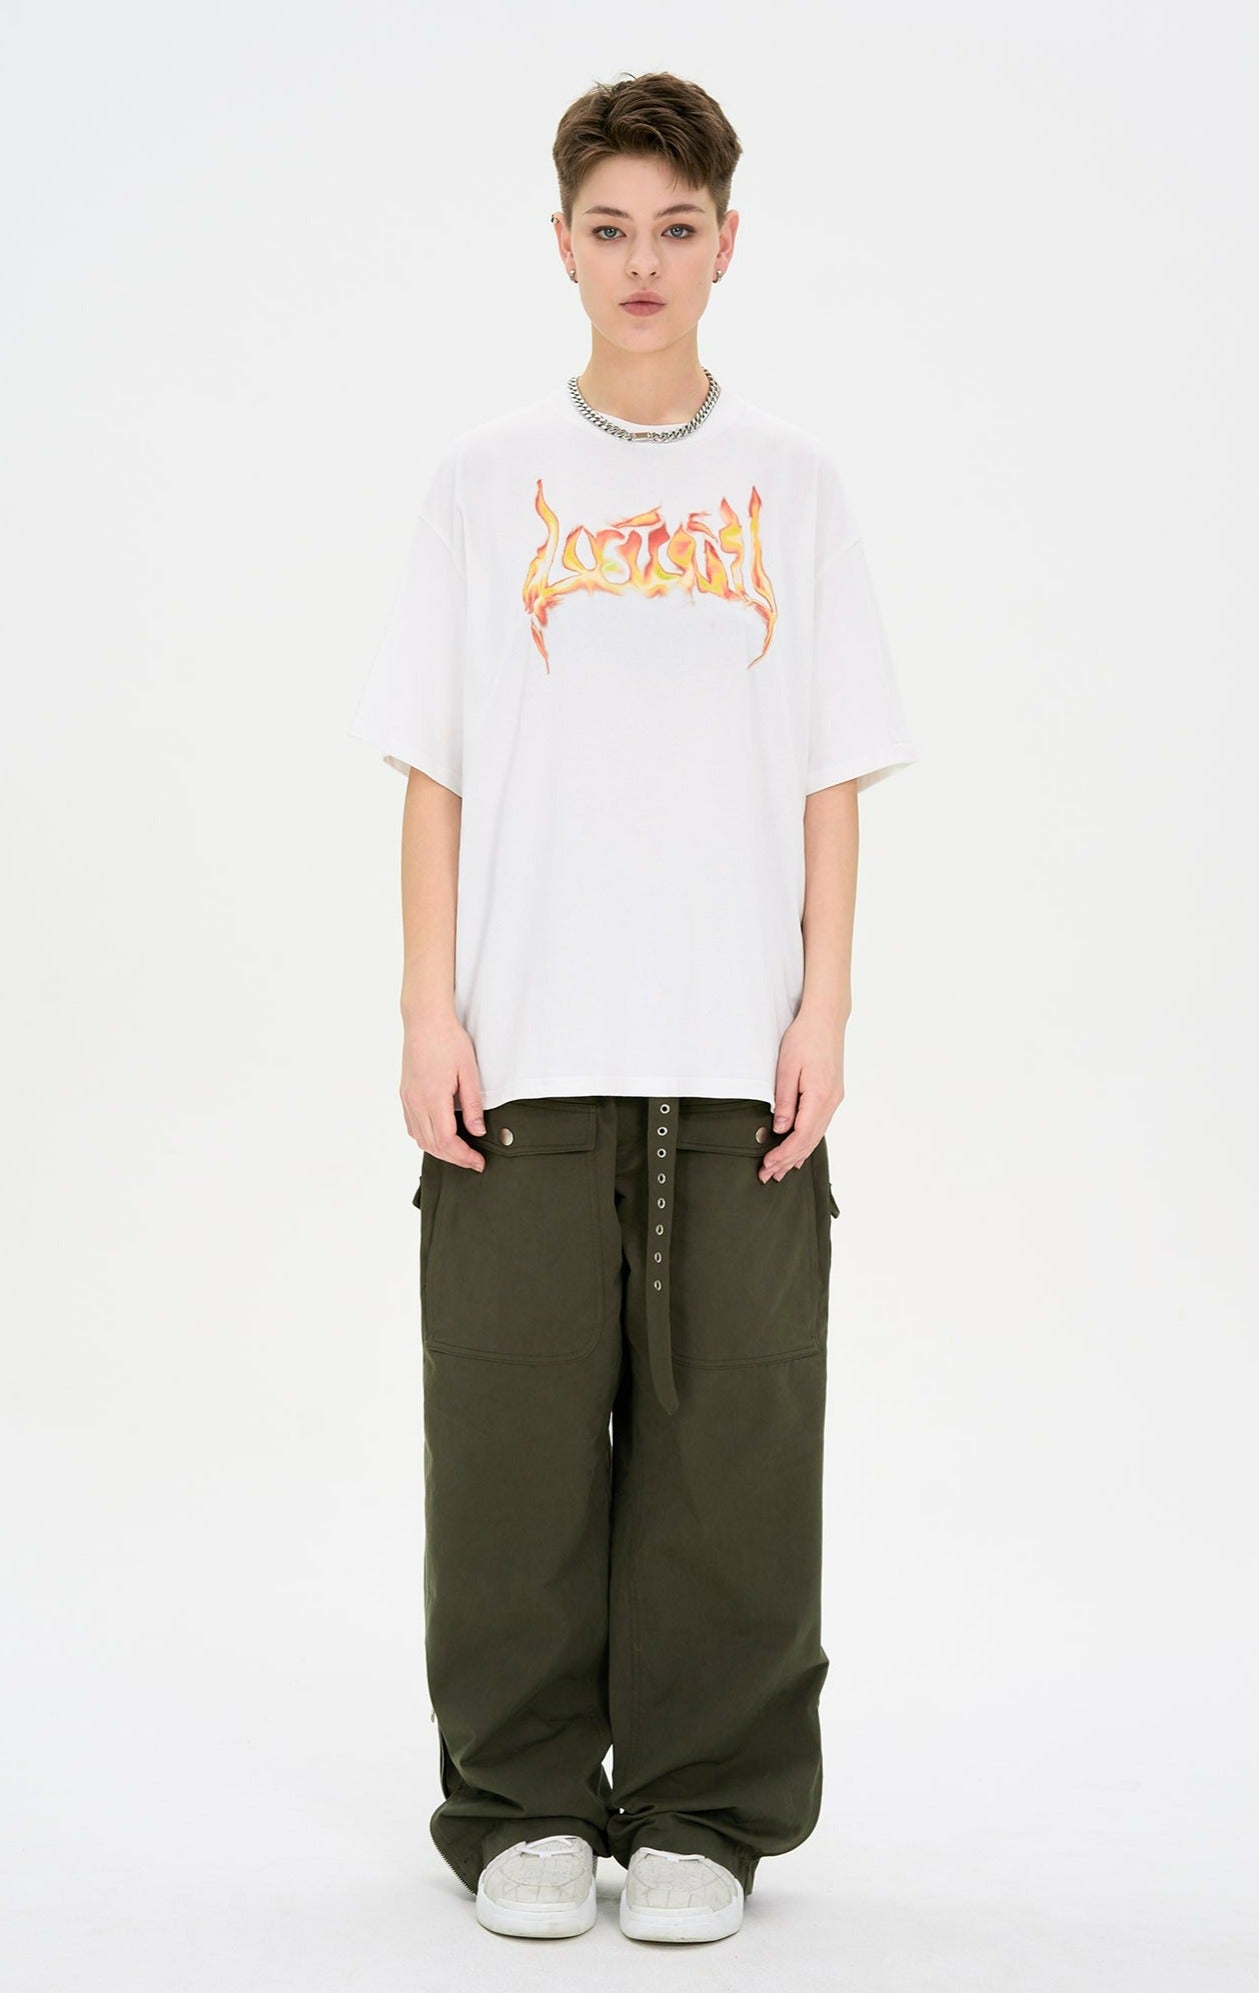 Buckle Belt Strap Cargo Pants Korean Street Fashion Pants By Lost CTRL Shop Online at OH Vault